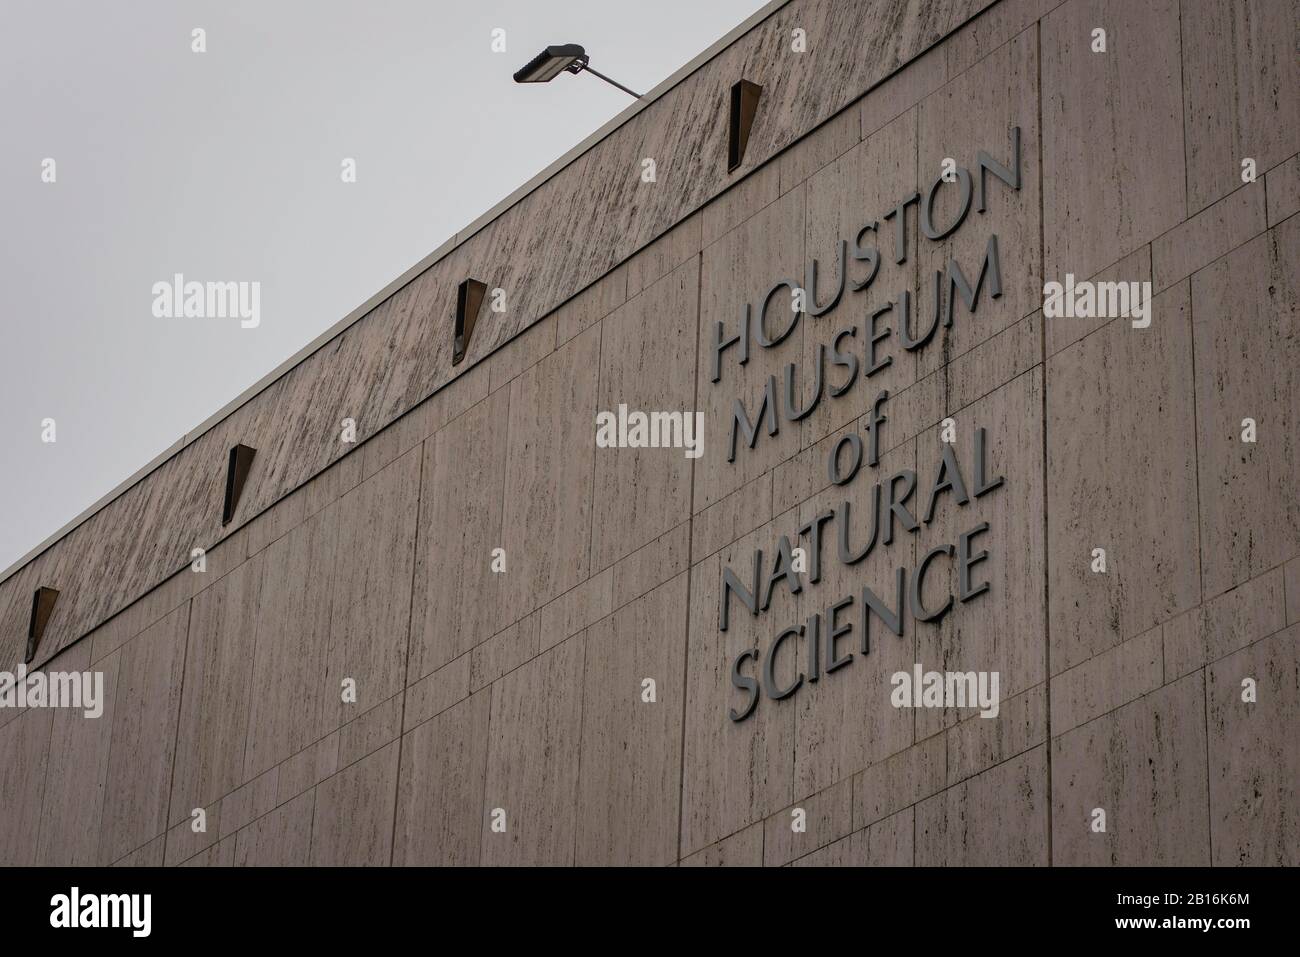 Houston, Texas - 11. Februar 2020: Text des Houston Museum of Natural Science über die Steinfassade Stockfoto